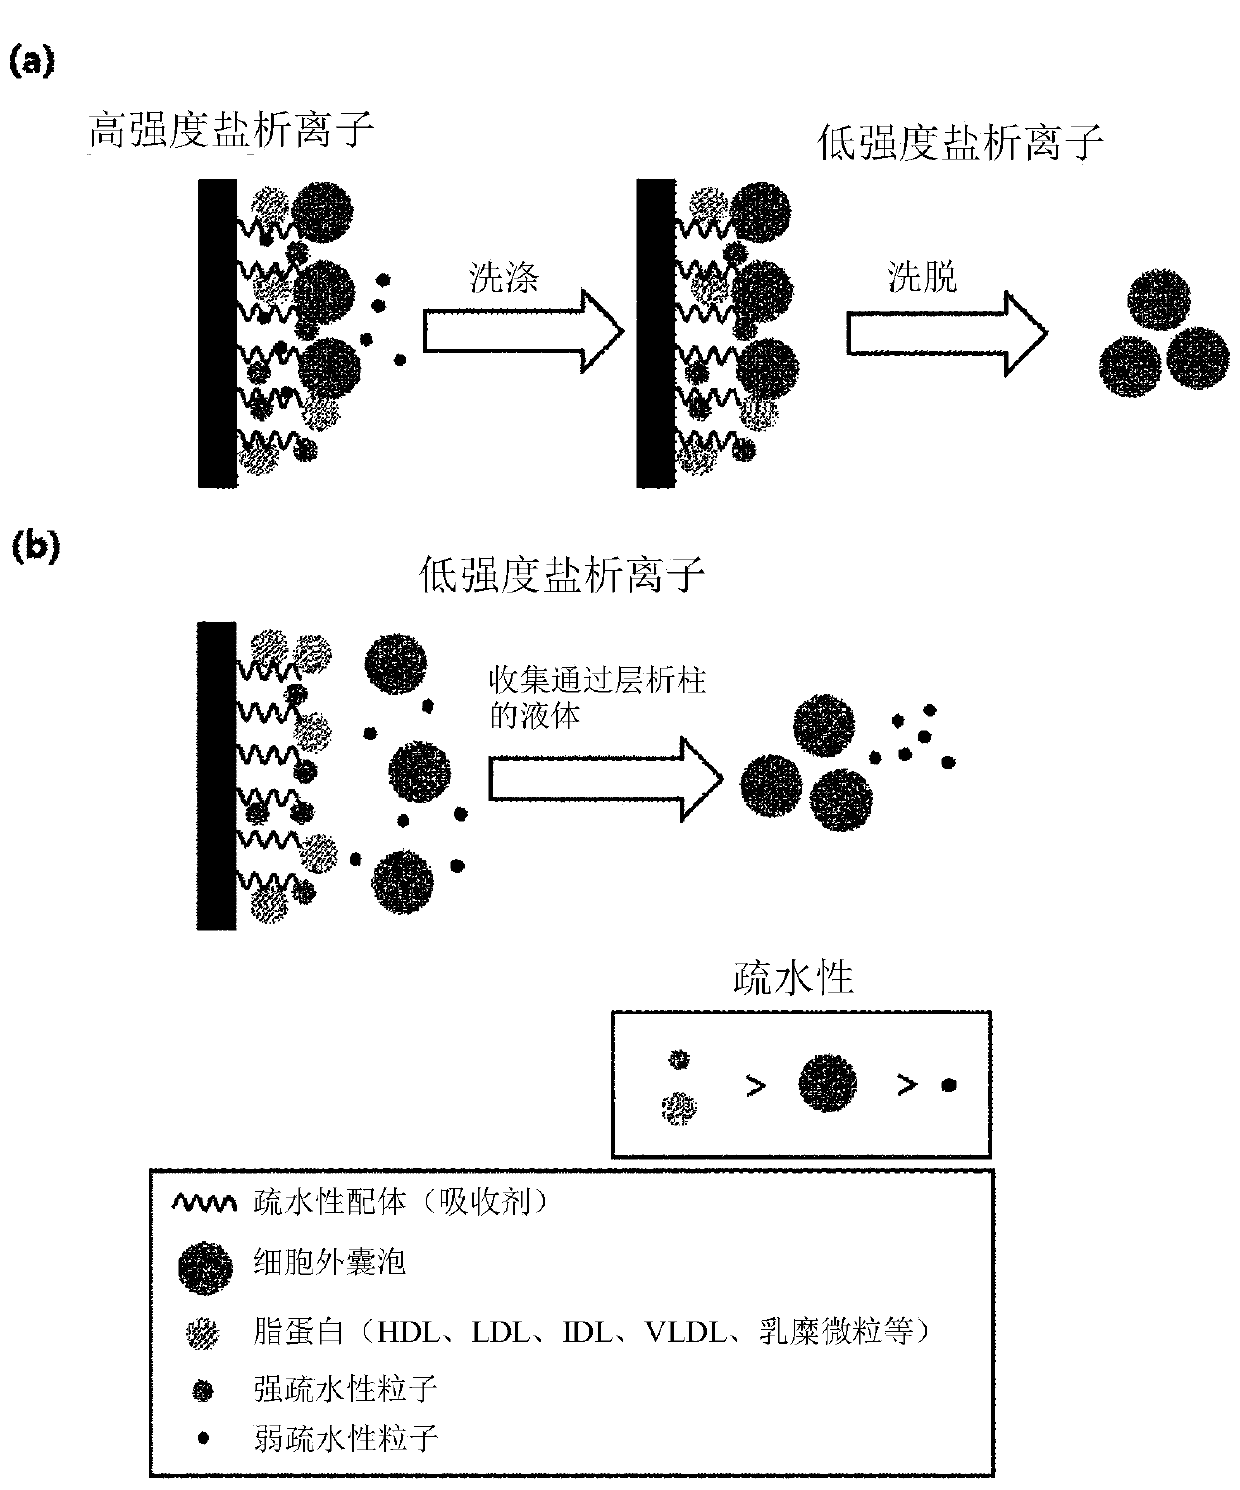 Method for isolating extracellular vesicle using hydrophobic interaction